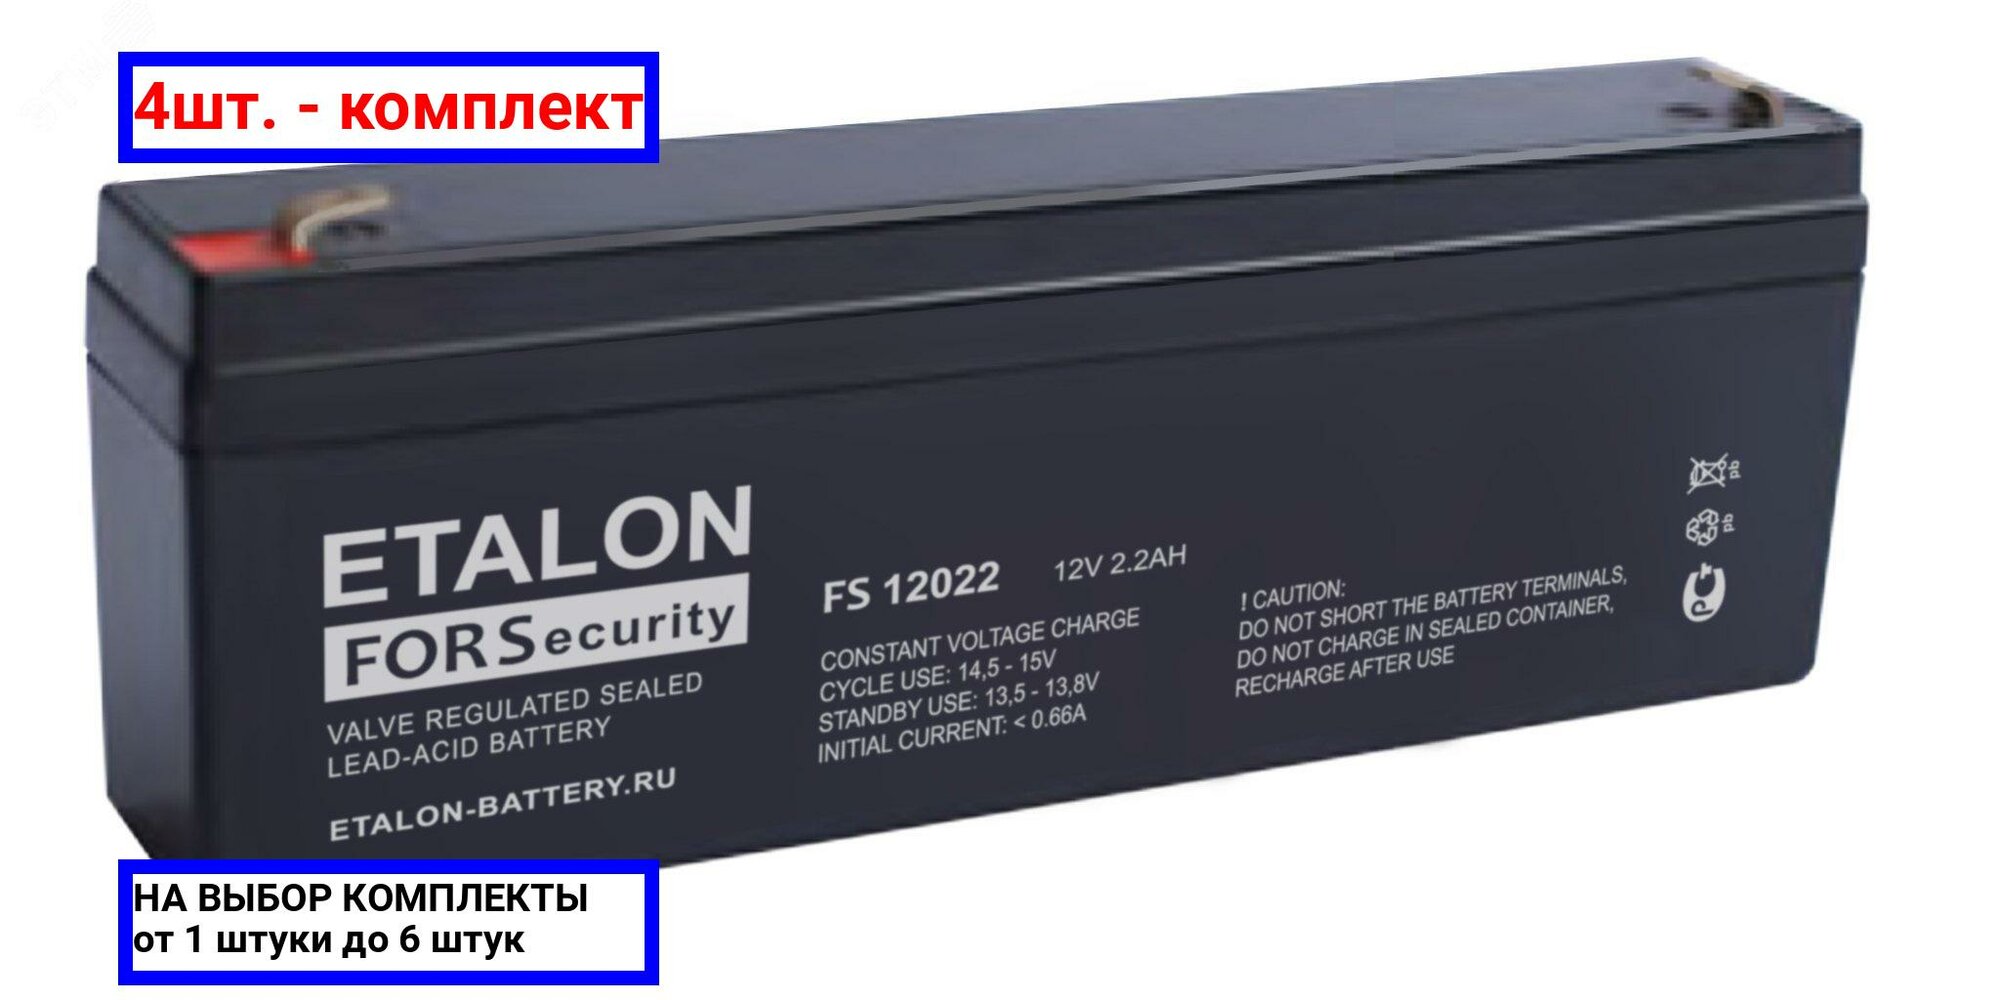 4шт. - Аккумулятор FS 12В 2,2Ач / Etalon battery; арт. FS 12022; оригинал / - комплект 4шт